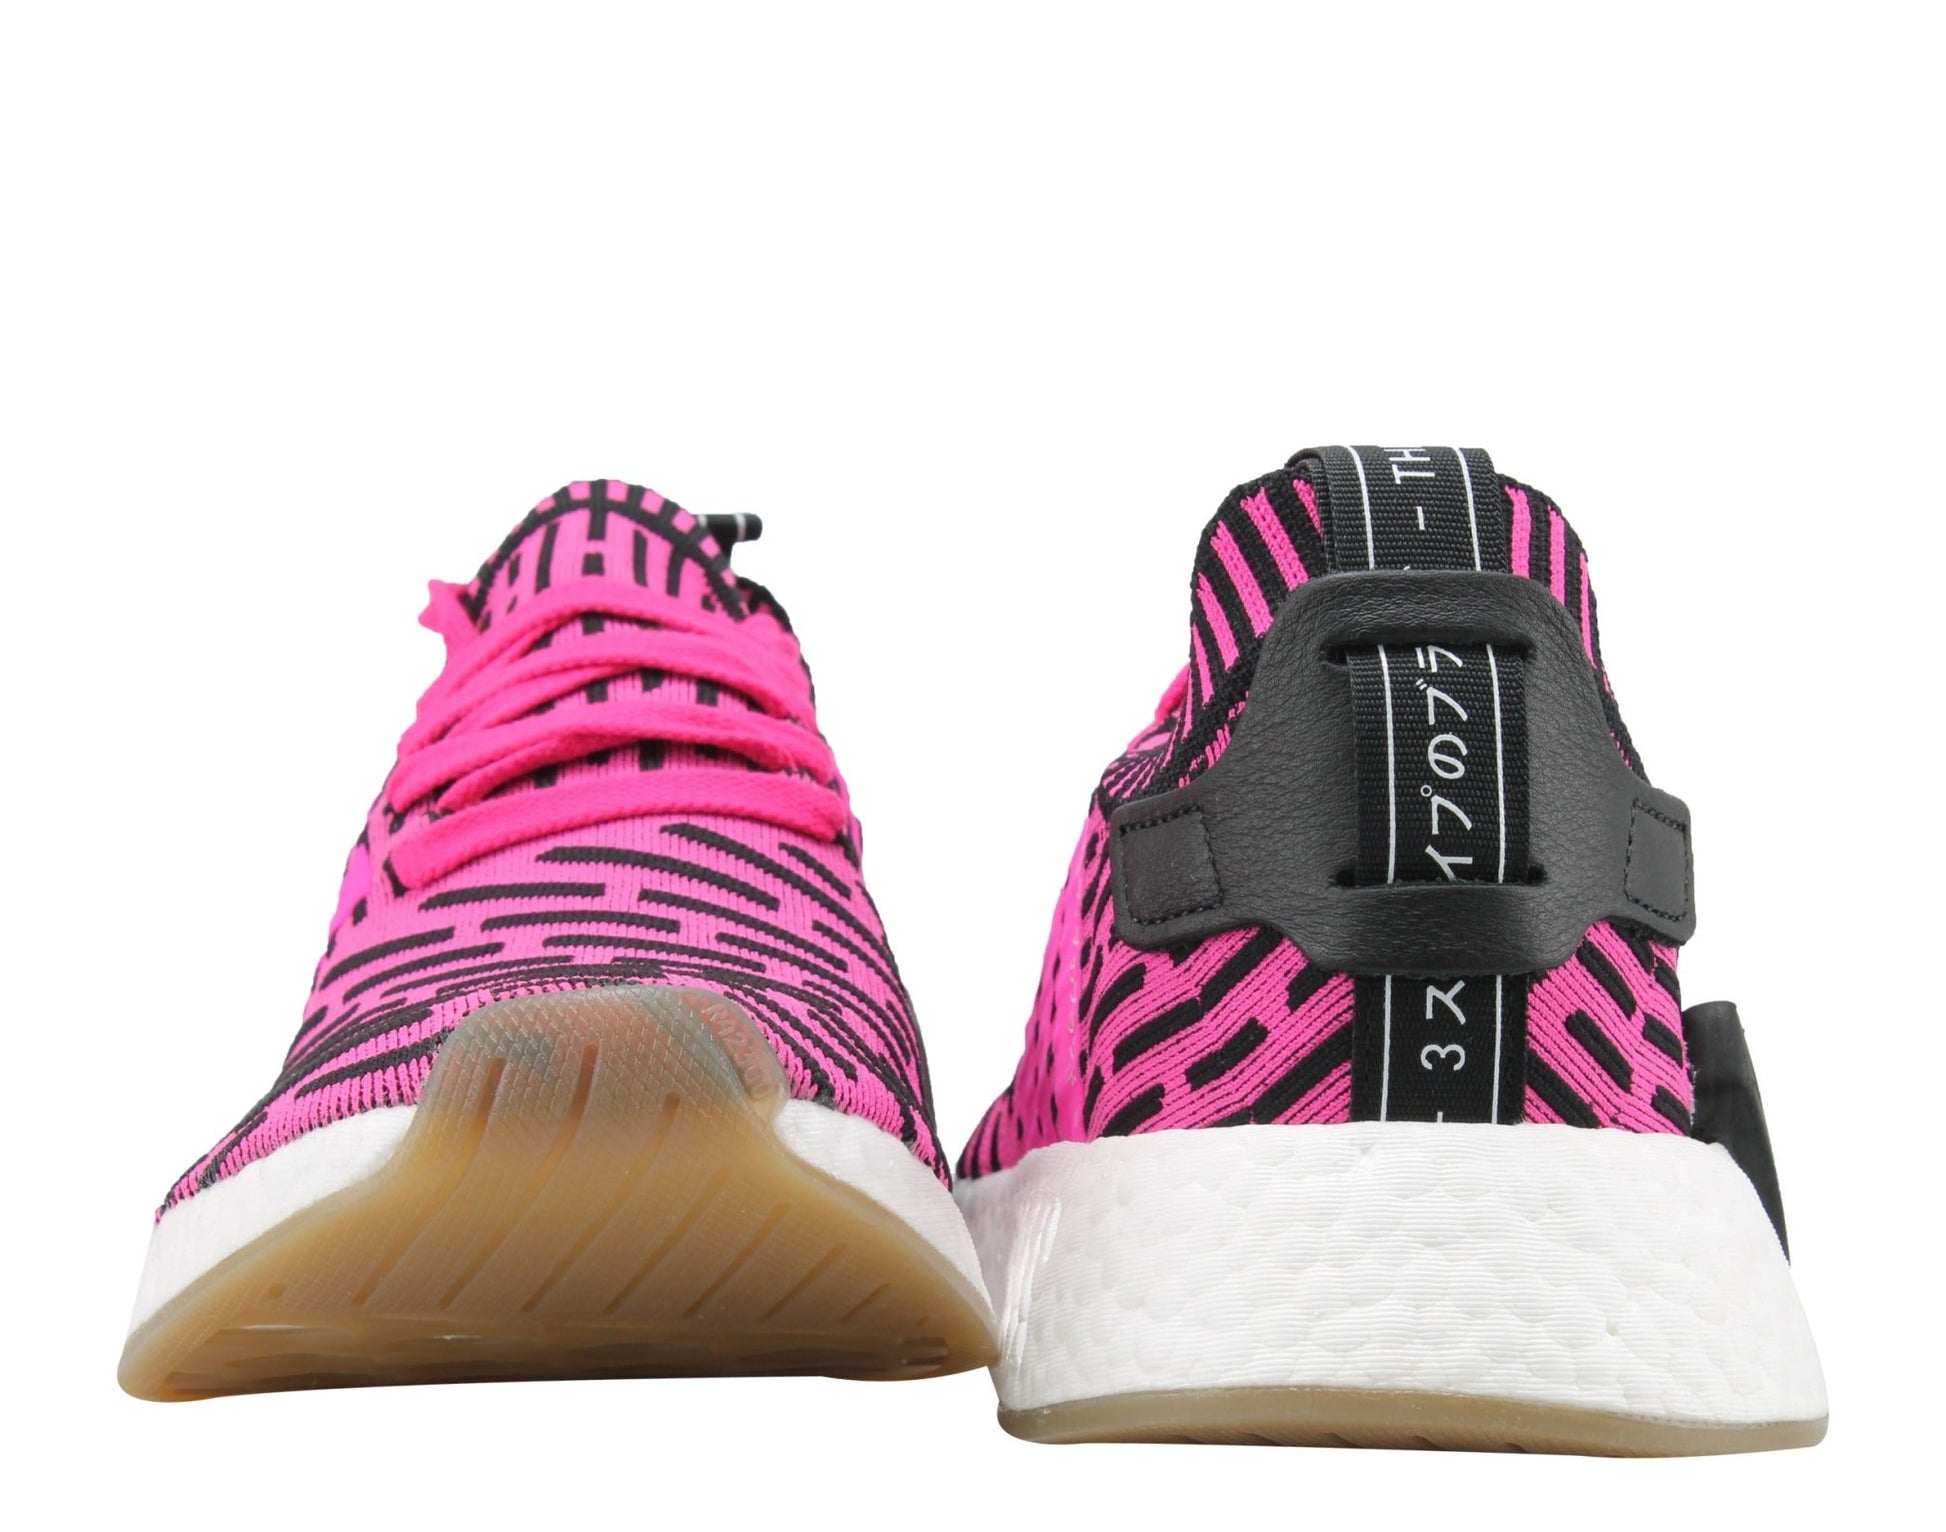 Adidas NMD_R2 PK Primeknit Shock Pink/Core Black Men's Running Shoes BY9697 - Becauze